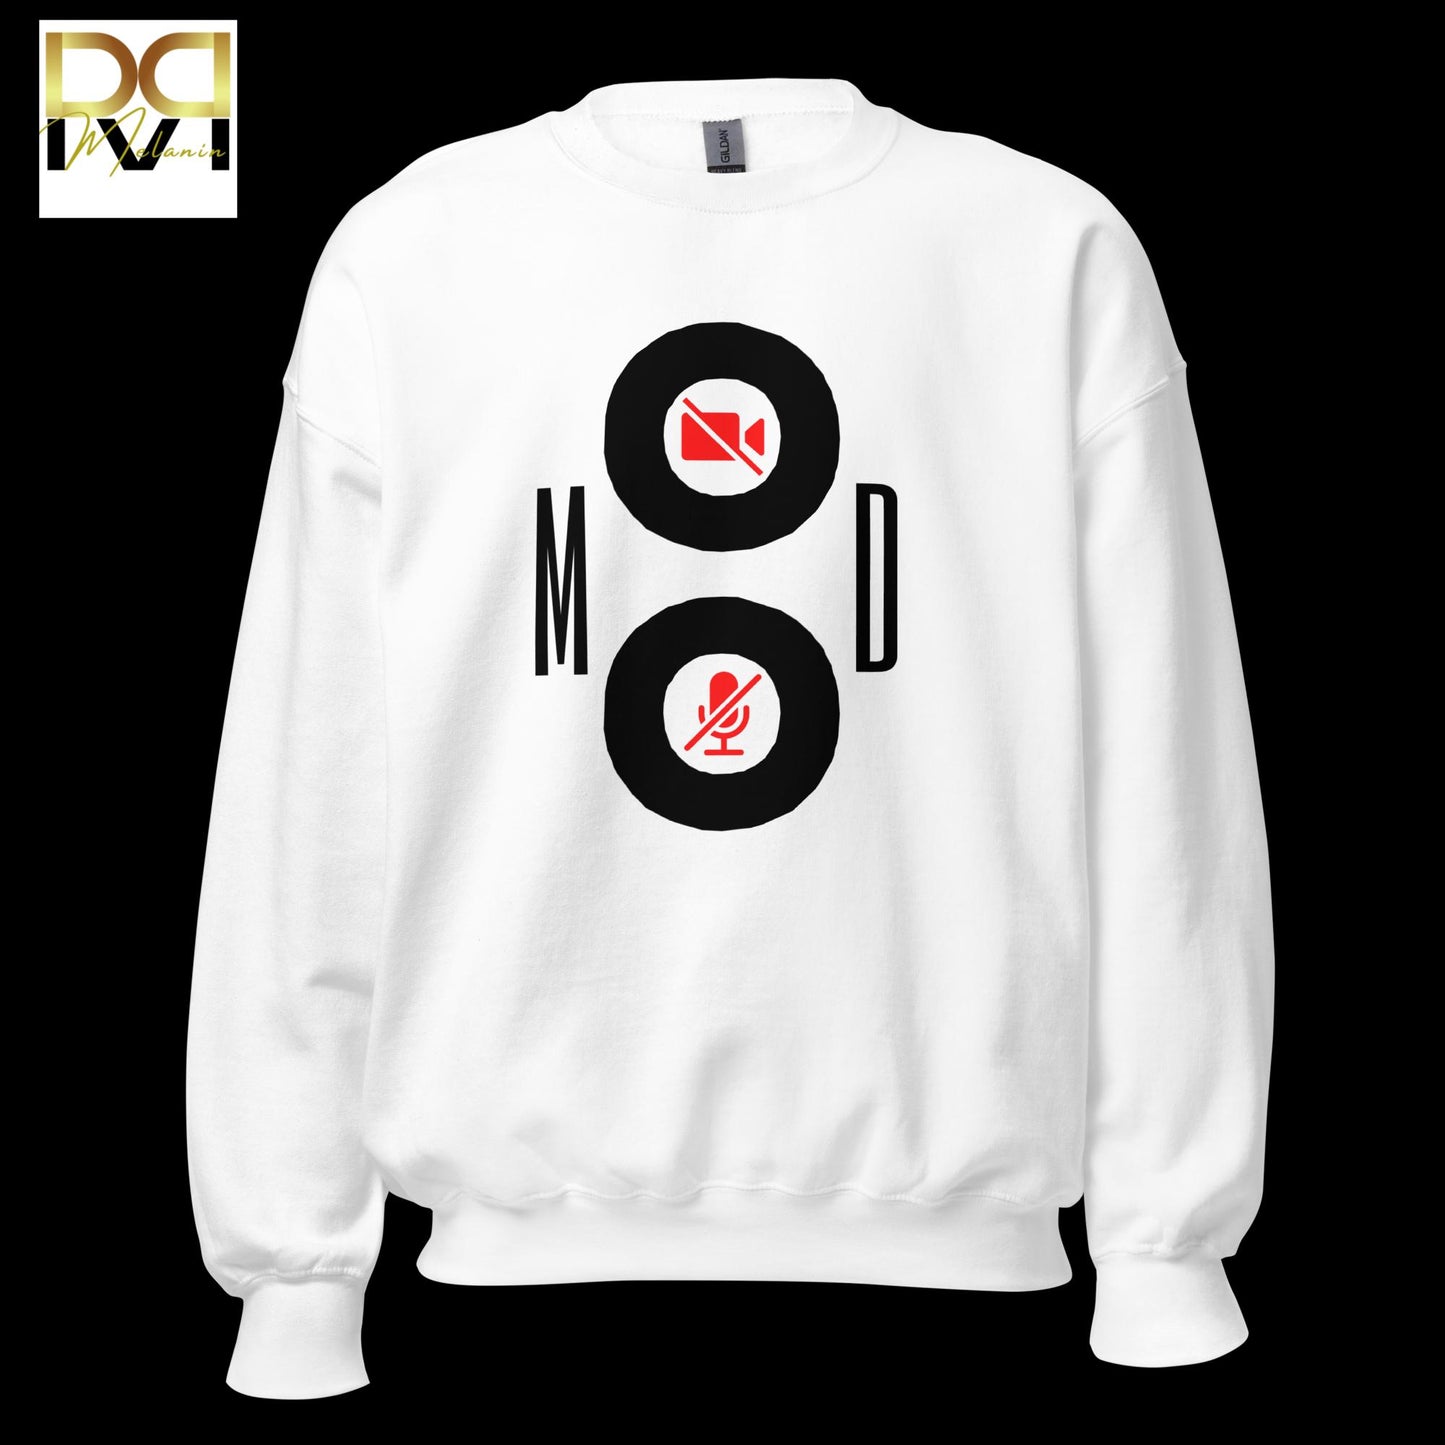 "Mood" Artistic Design Sweatshirt - Express Yourself Creatively